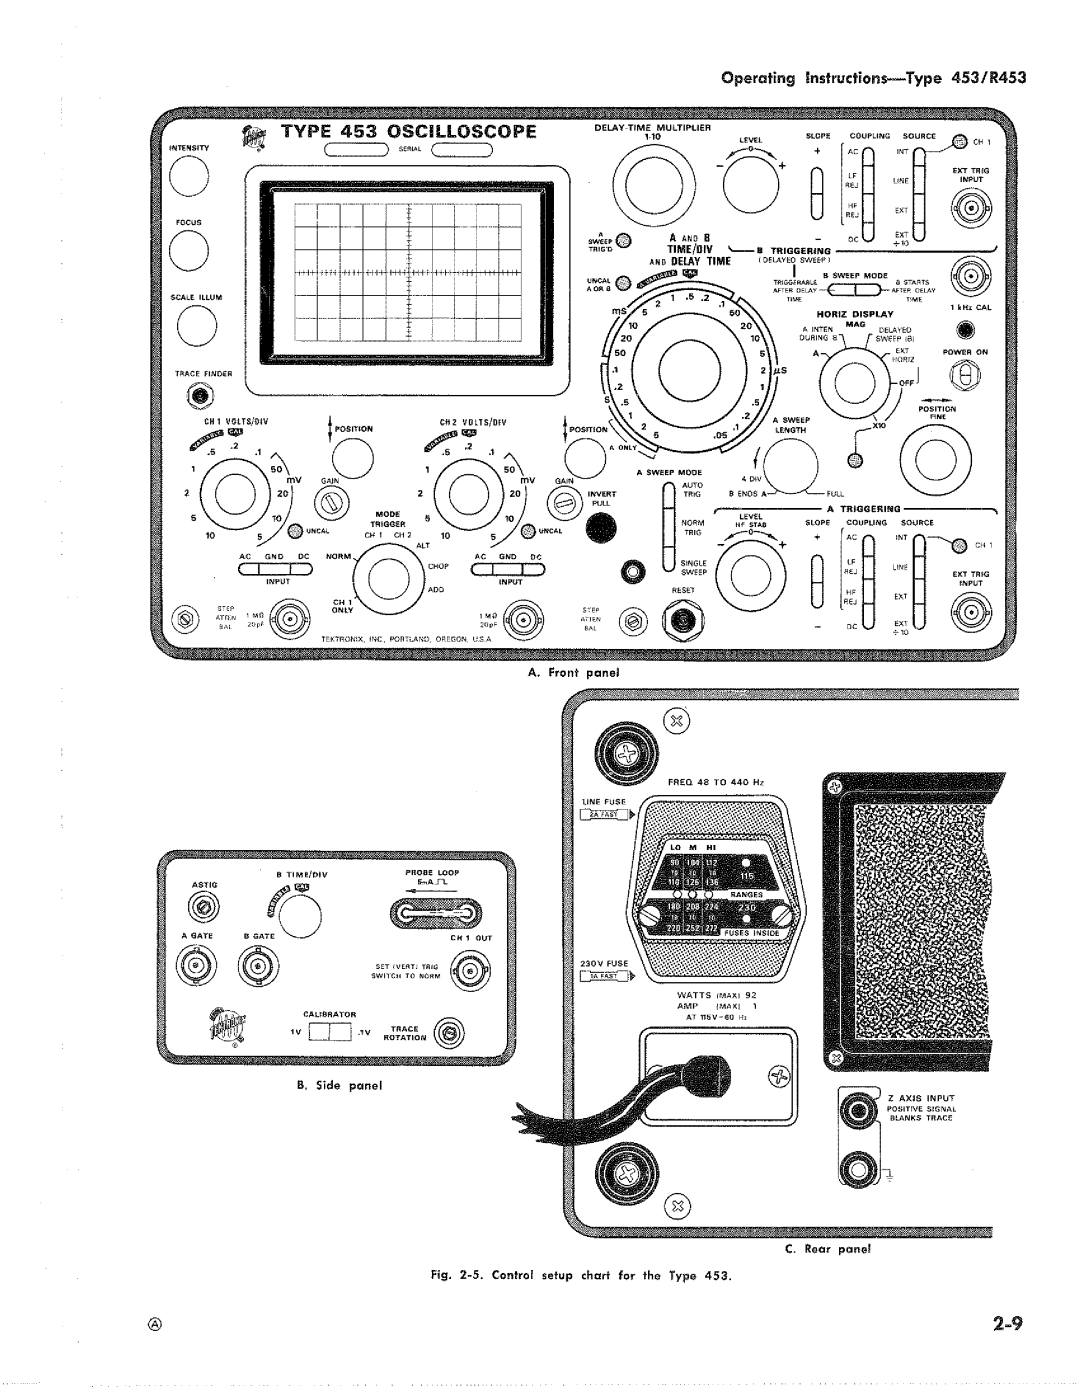 Tektronix R453 manual 